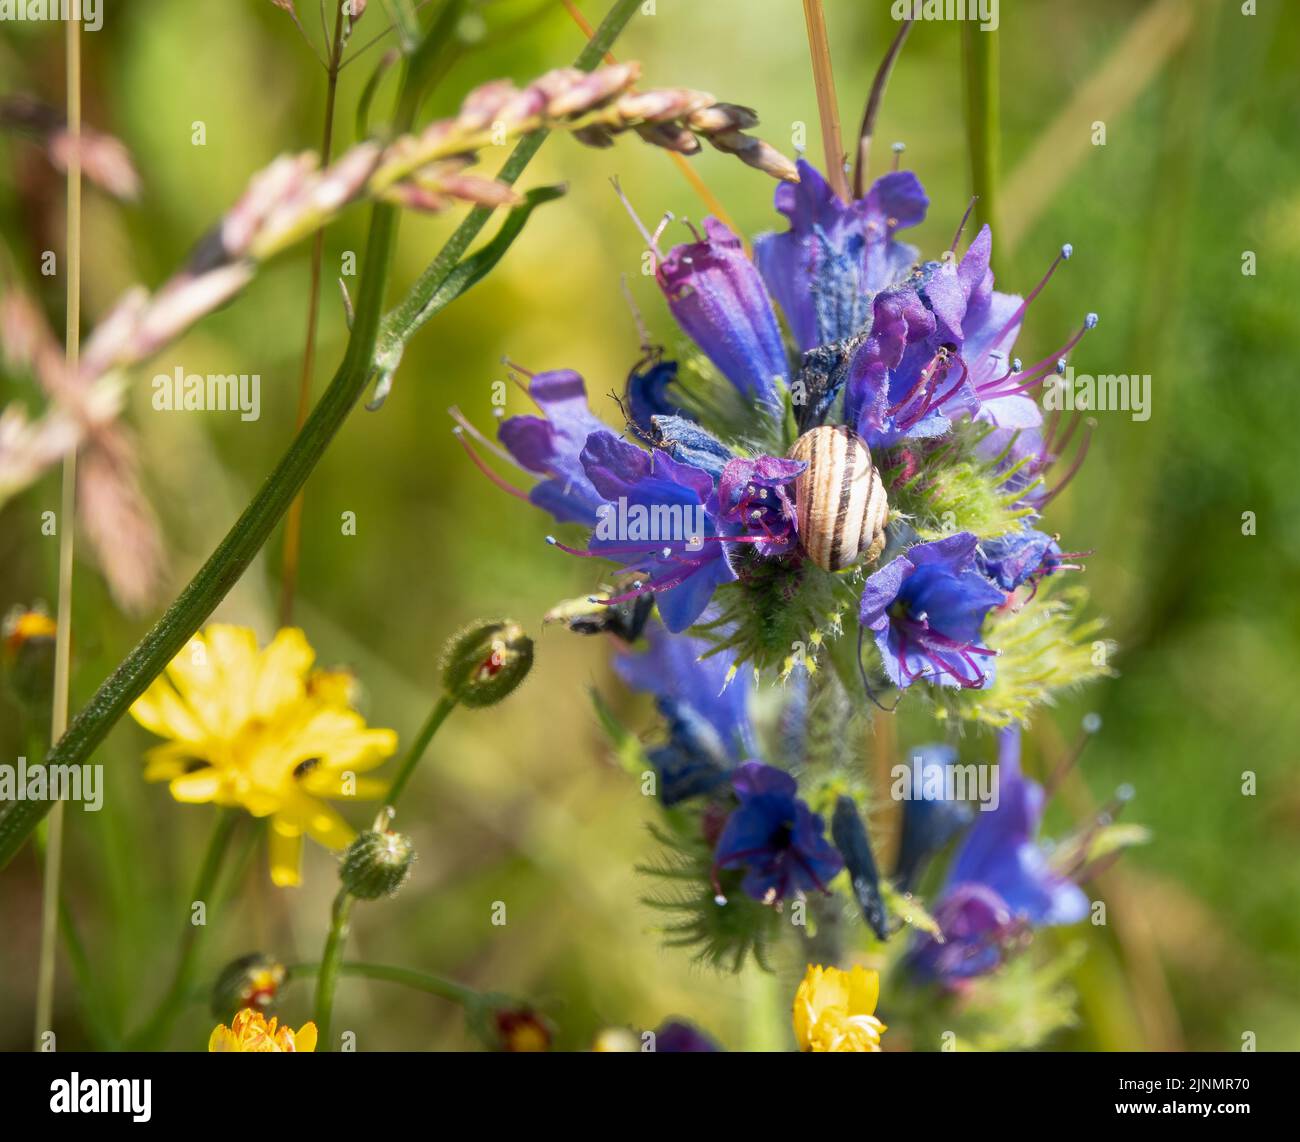 close-up of a Snail amongst blue flowers of Viper's-bugloss (Echium vulgare) Stock Photo